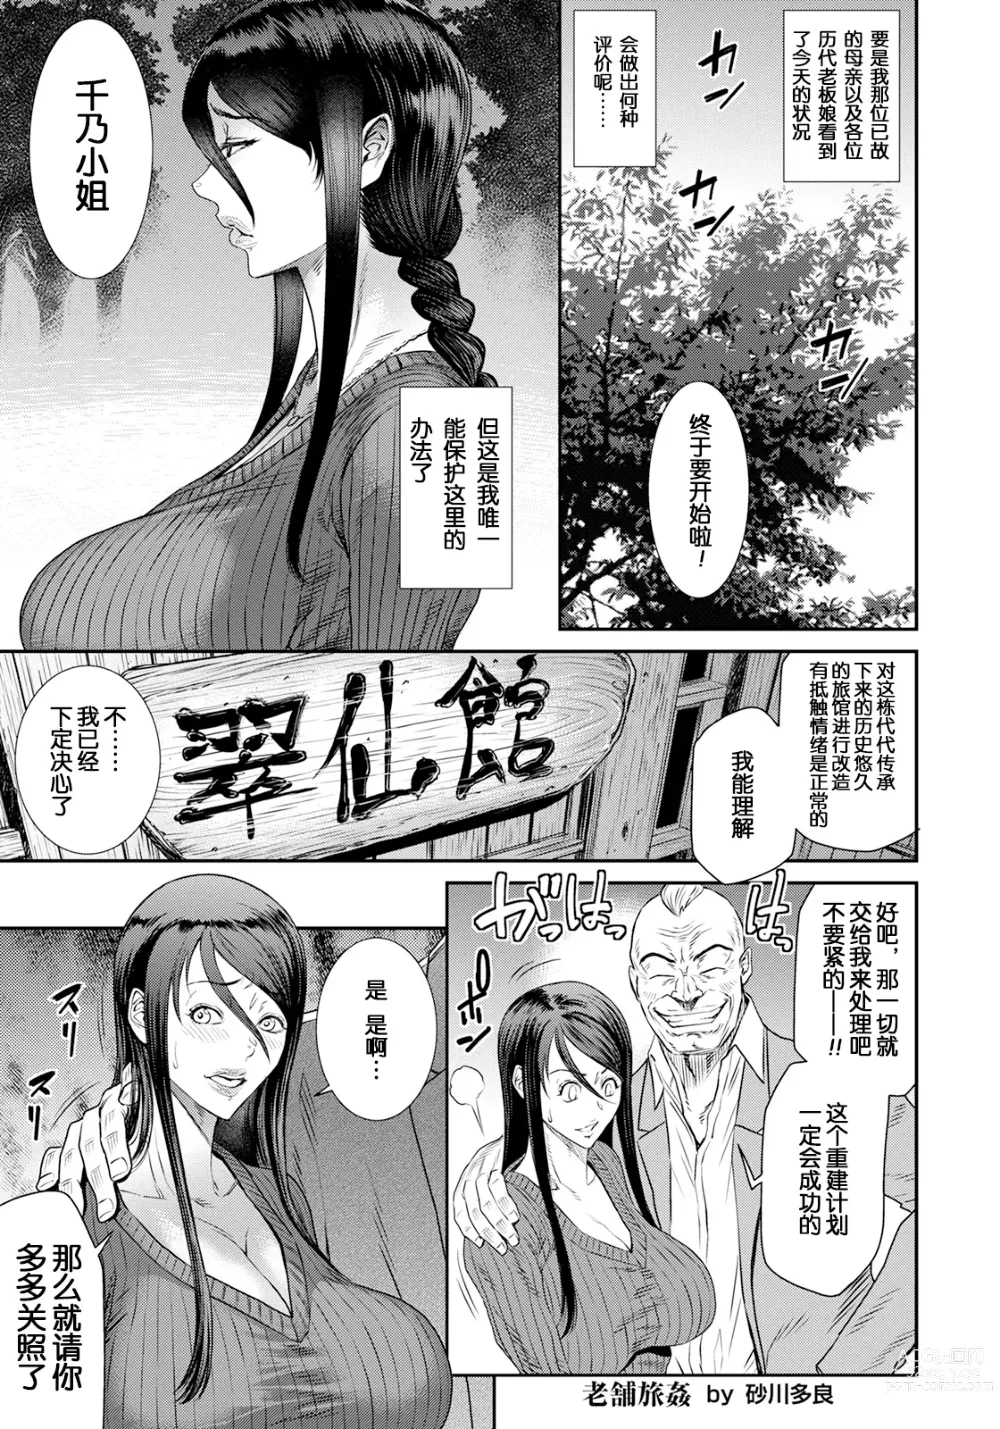 Page 2 of manga Shinise Ryokan